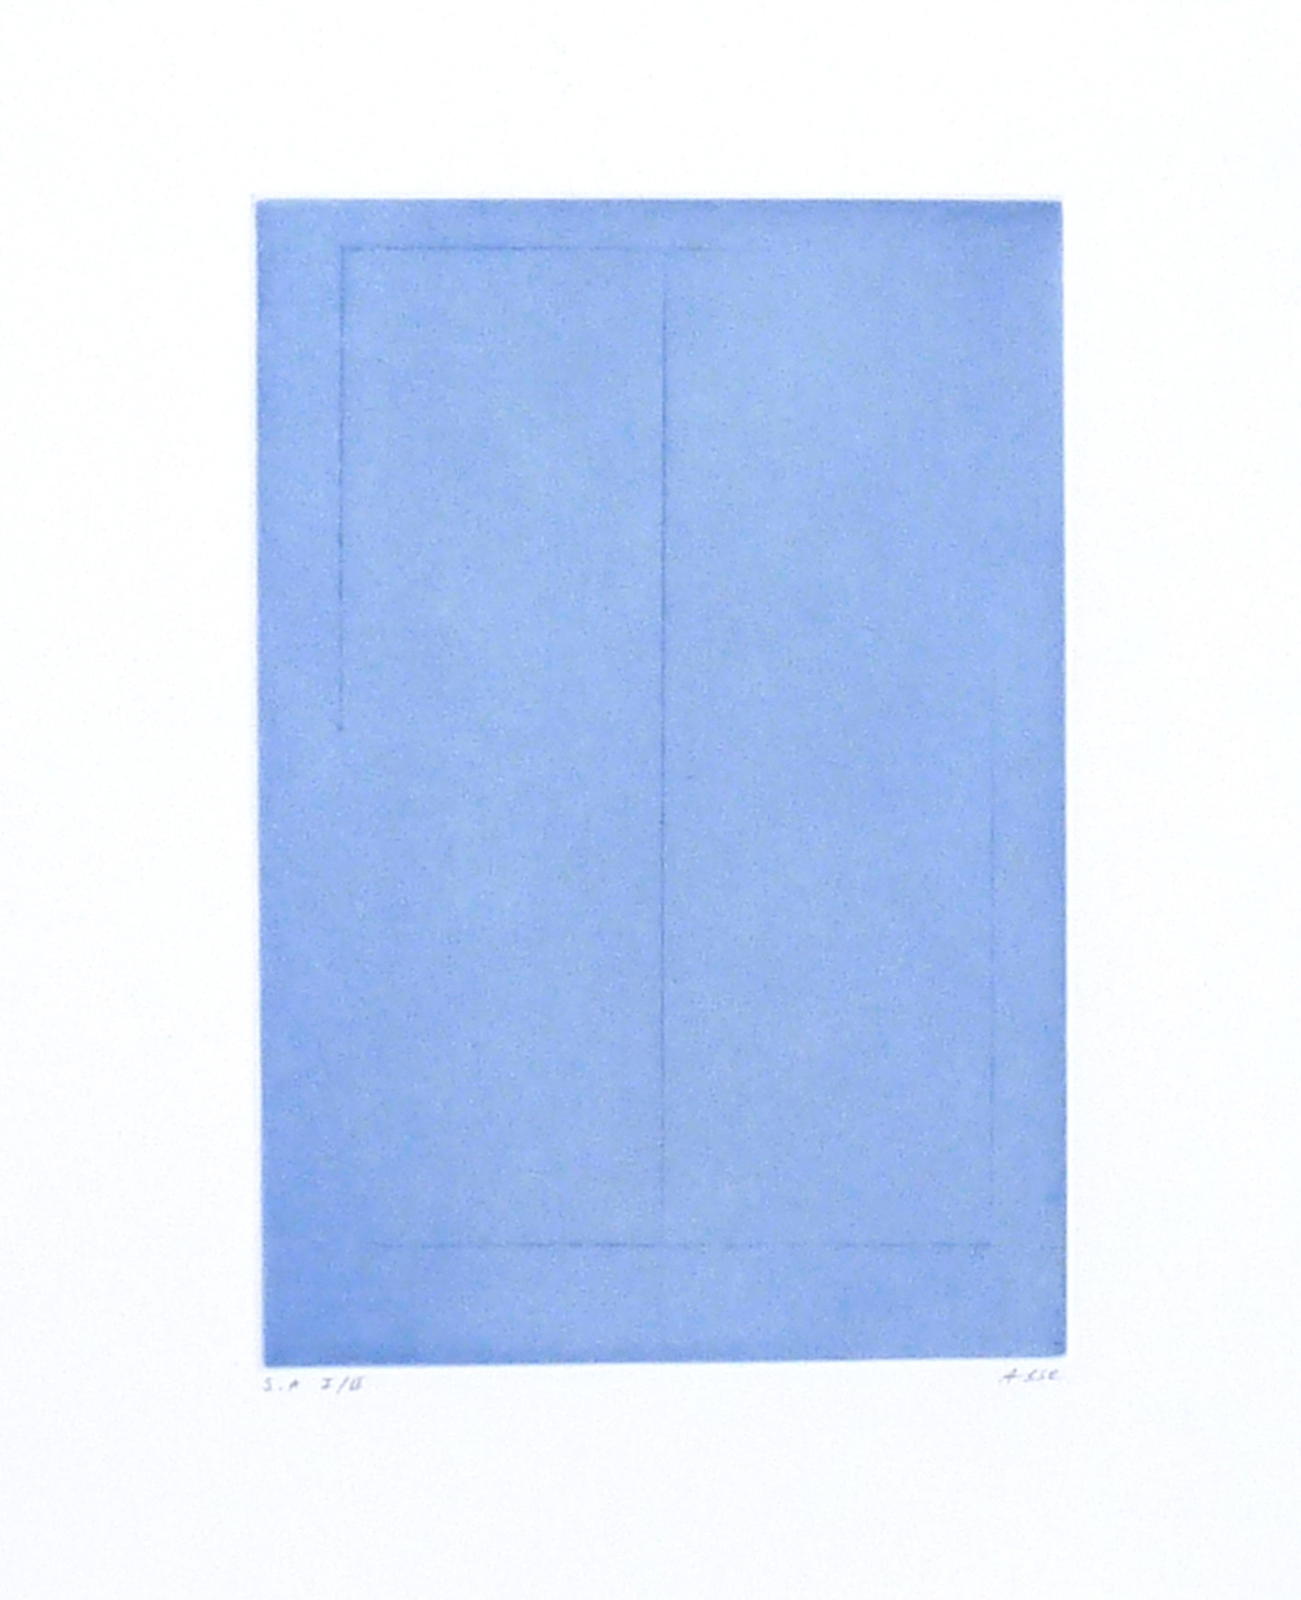 Transparence bleue, 2004